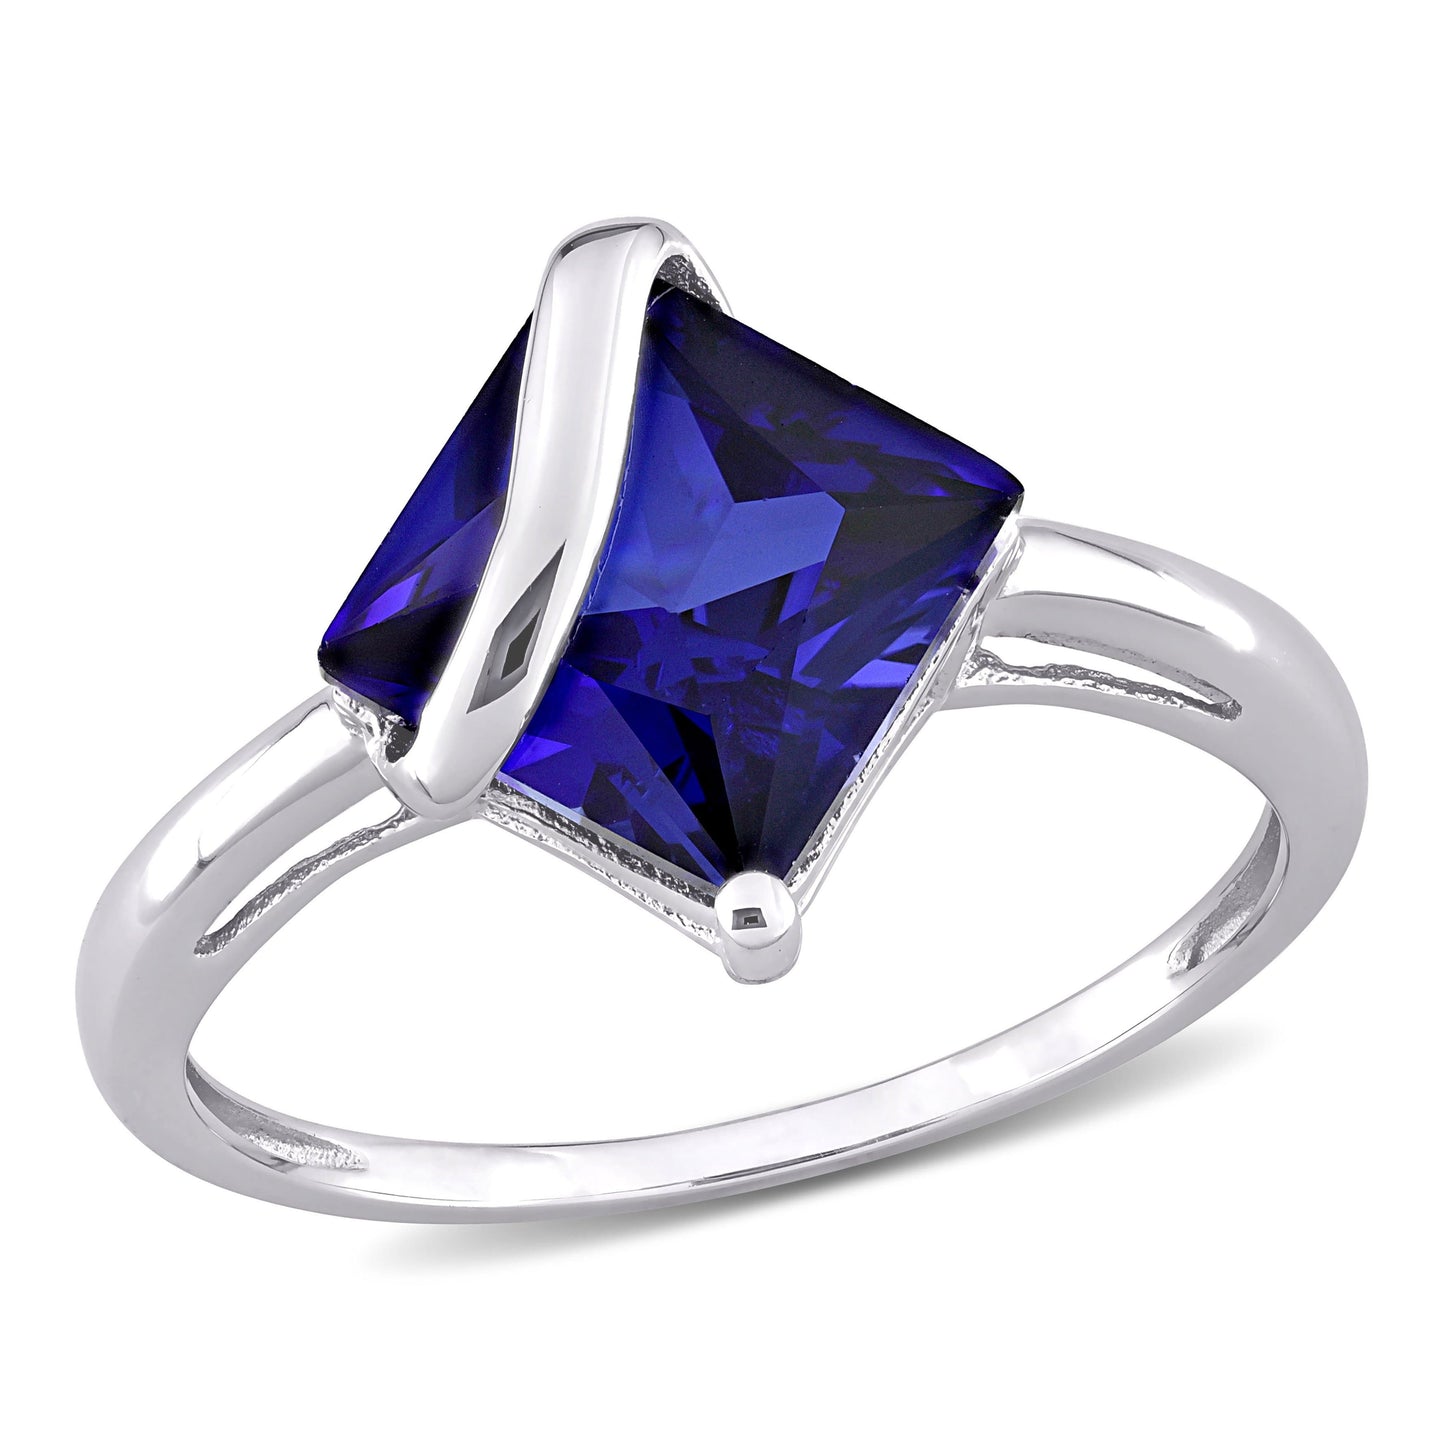 Sophia B 3ct Created Blue Sapphire Ring